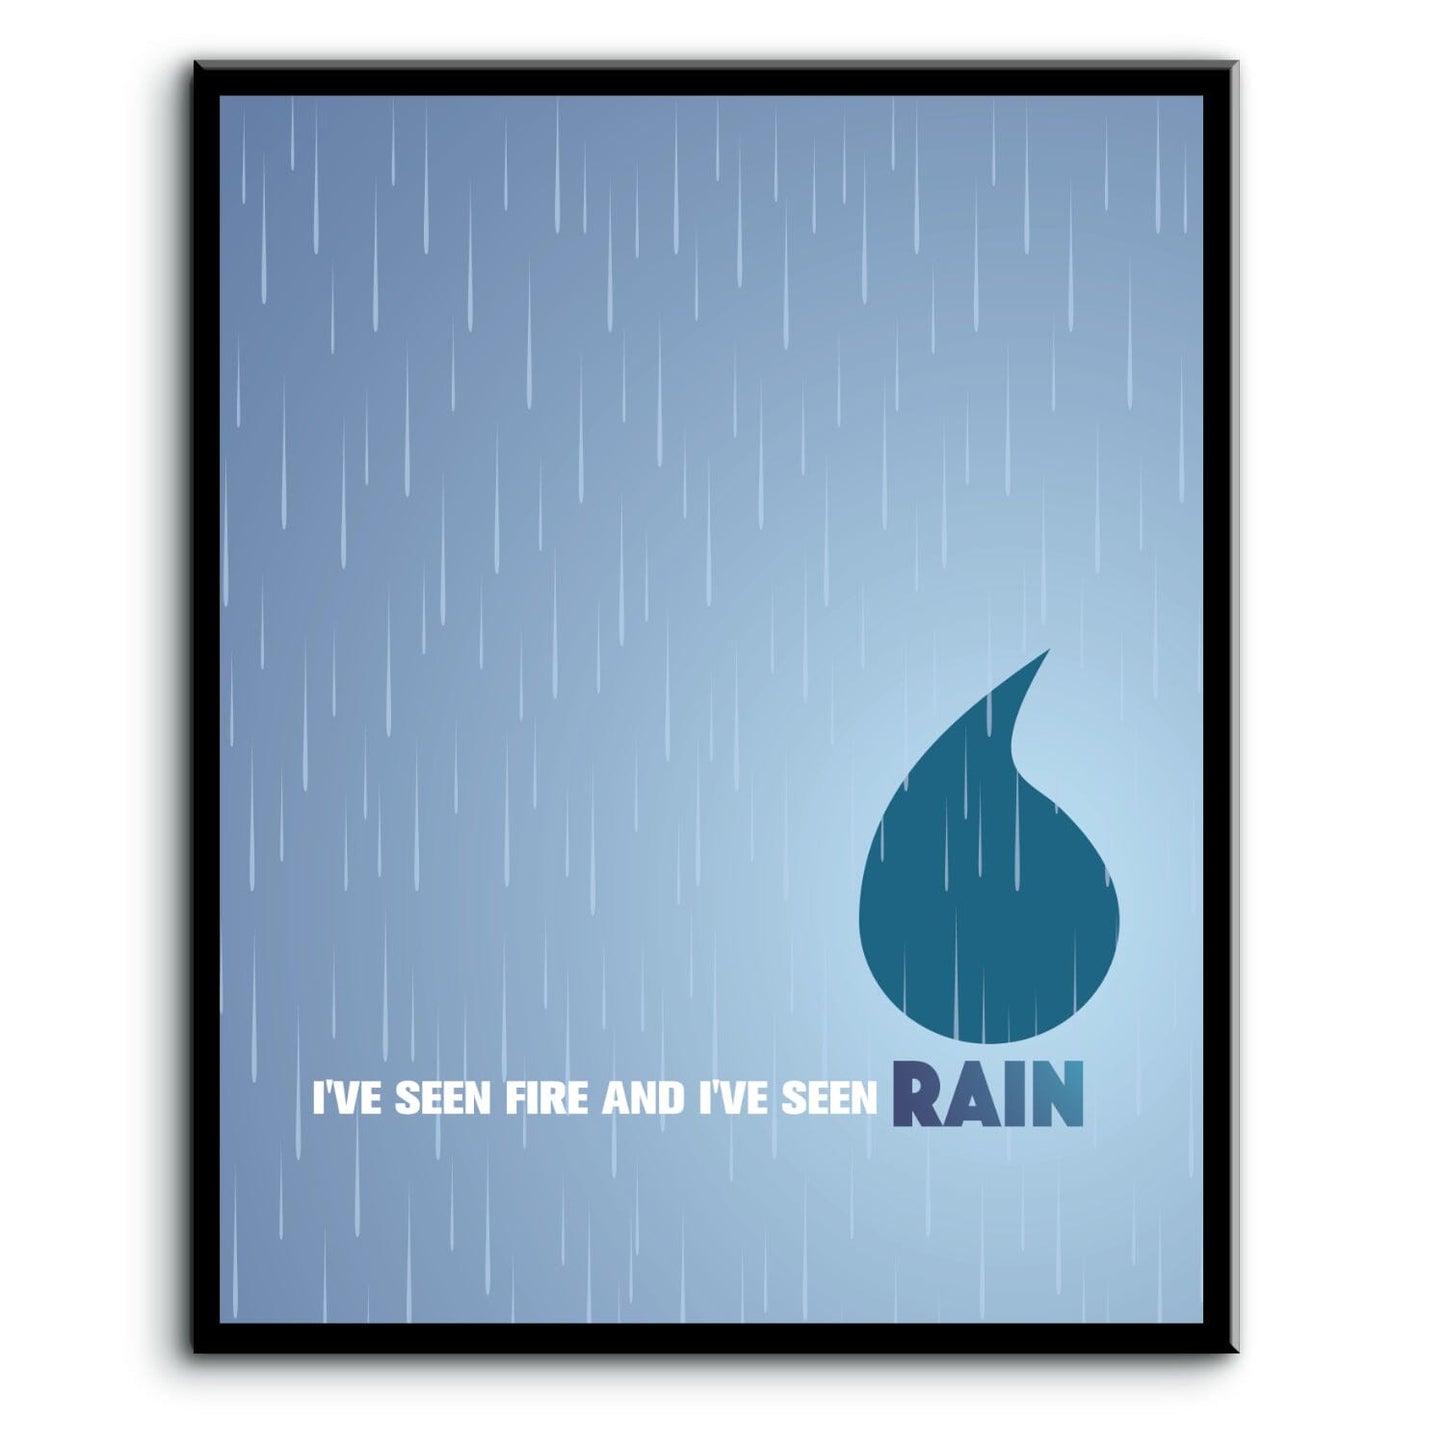 Fire and Rain by James Taylor - Music Wall Art Print Poster Song Lyrics Art Song Lyrics Art 